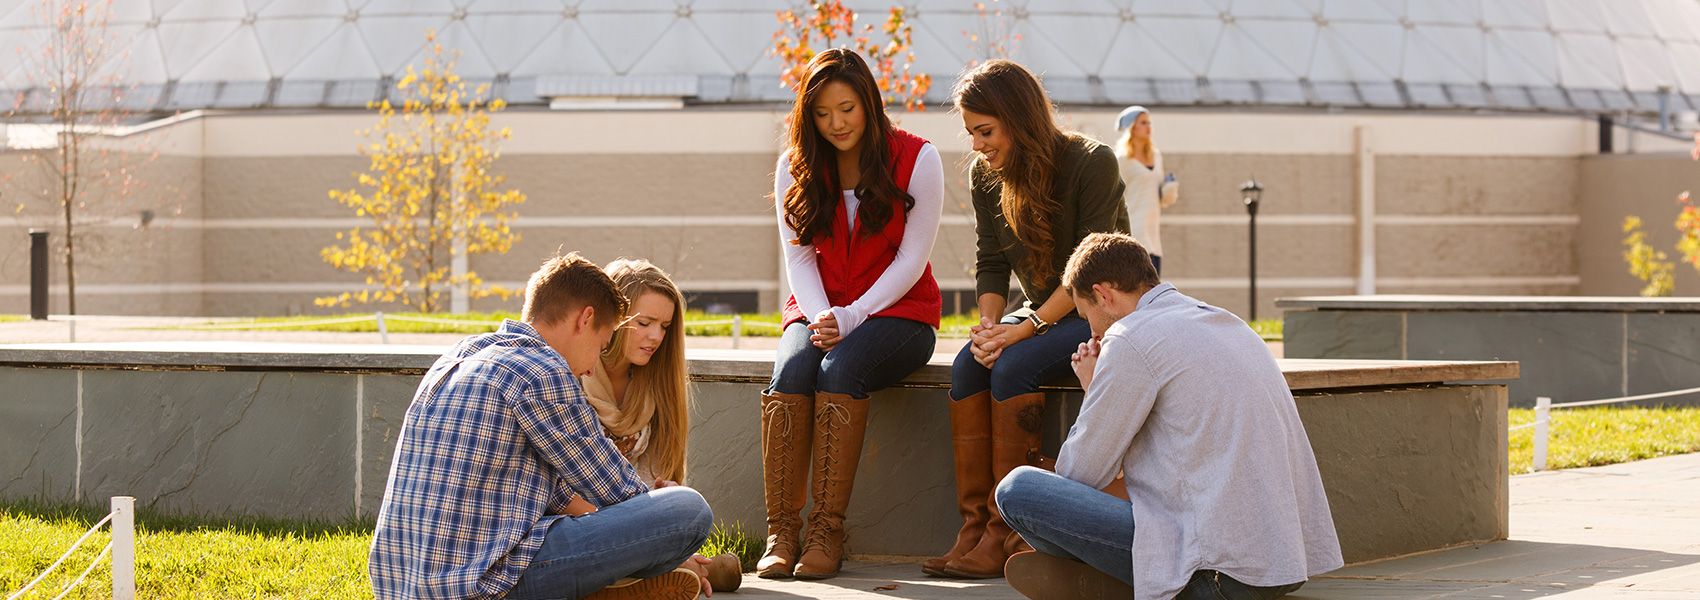 students praying on campus